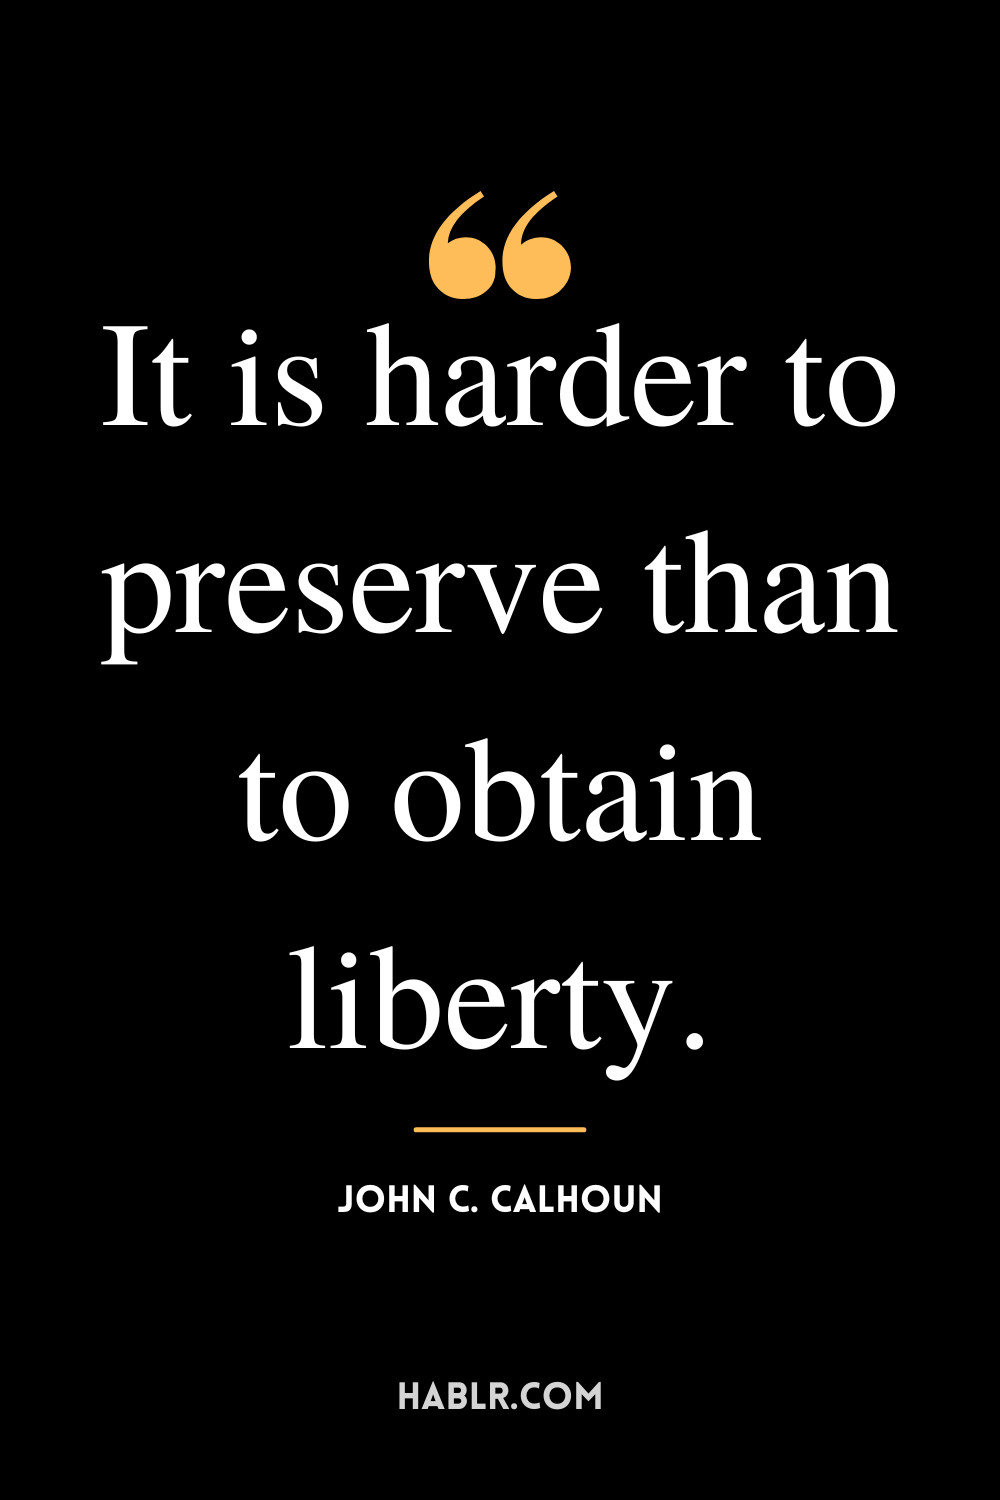 “It is harder to preserve than to obtain liberty.” -John C. Calhoun